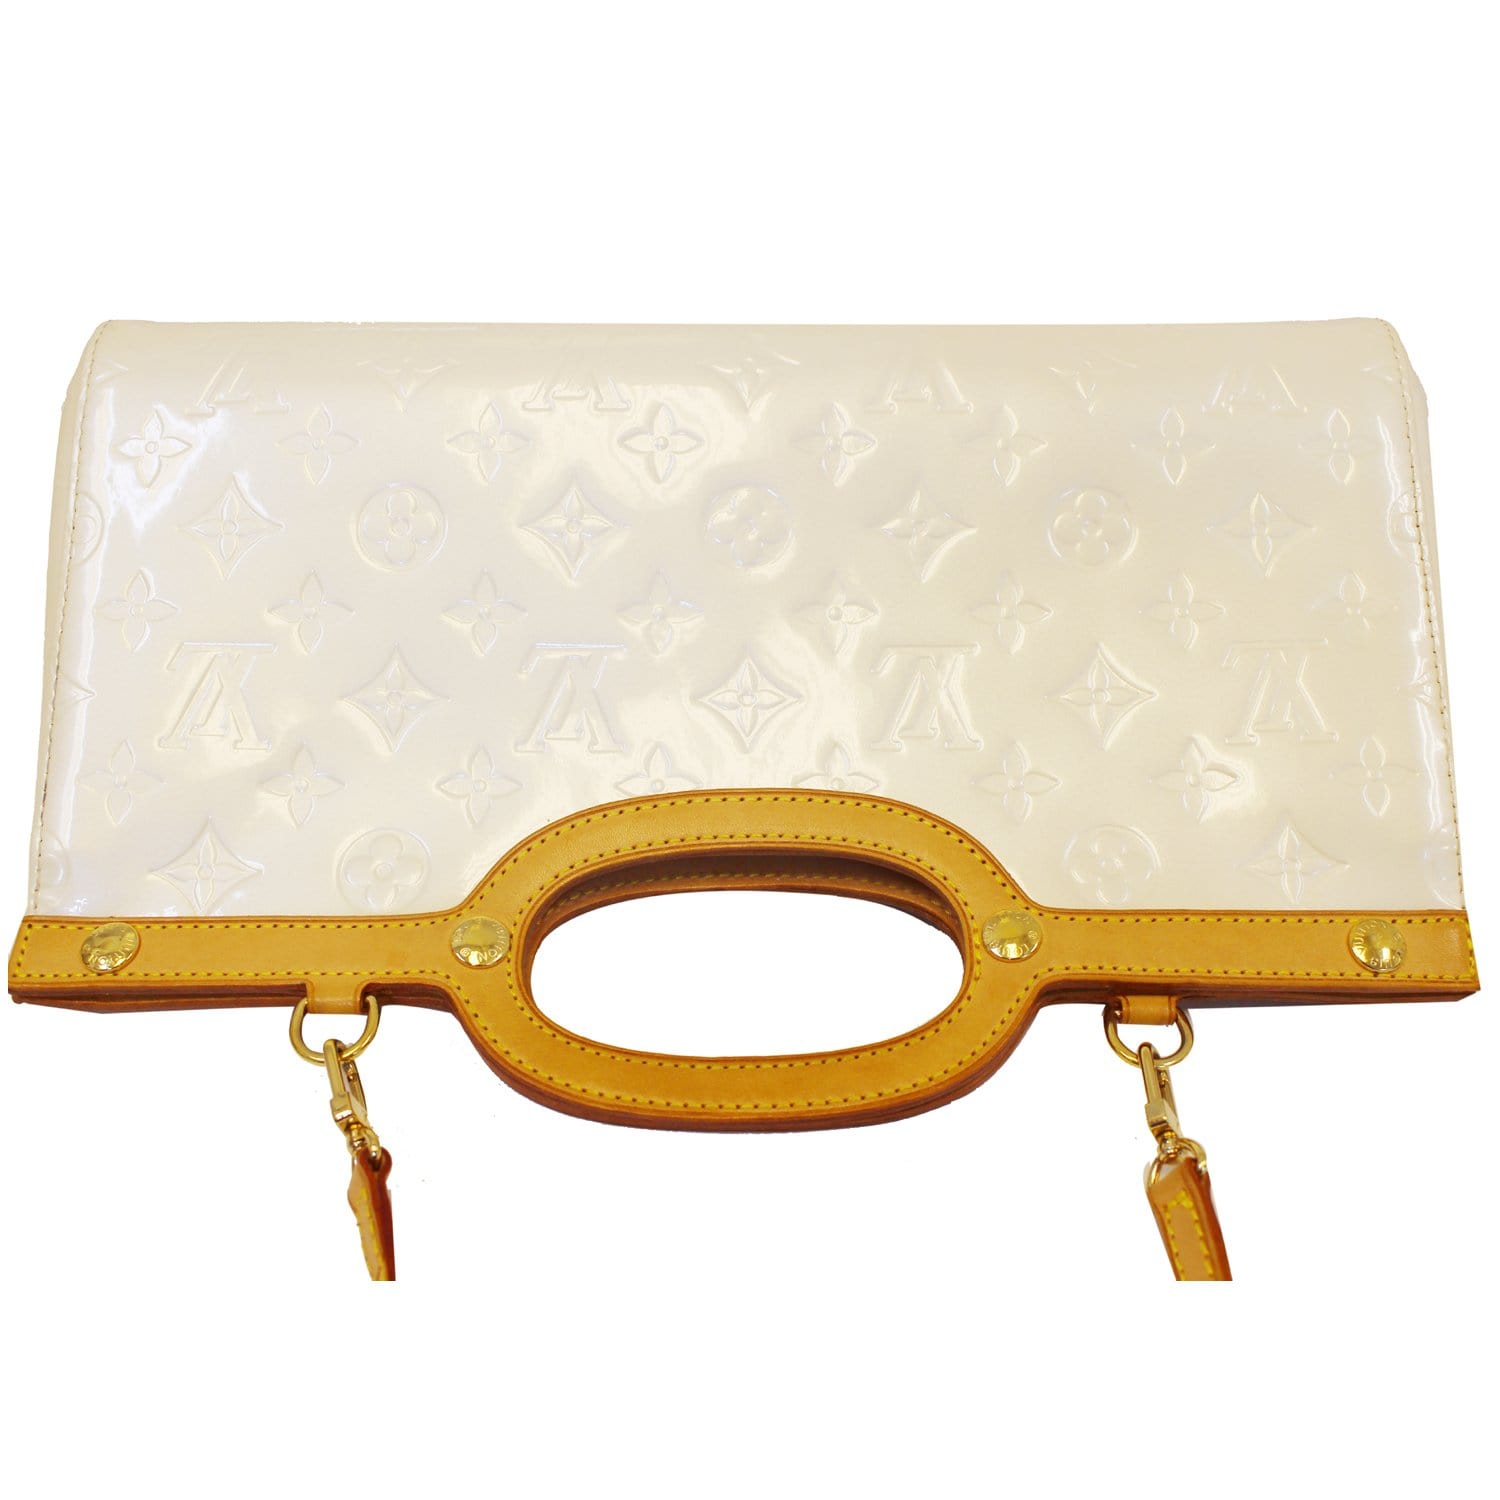 Louis Vuitton Vernis - Handbags - K'LeChan Luxury Consignment and Retail  Boutique